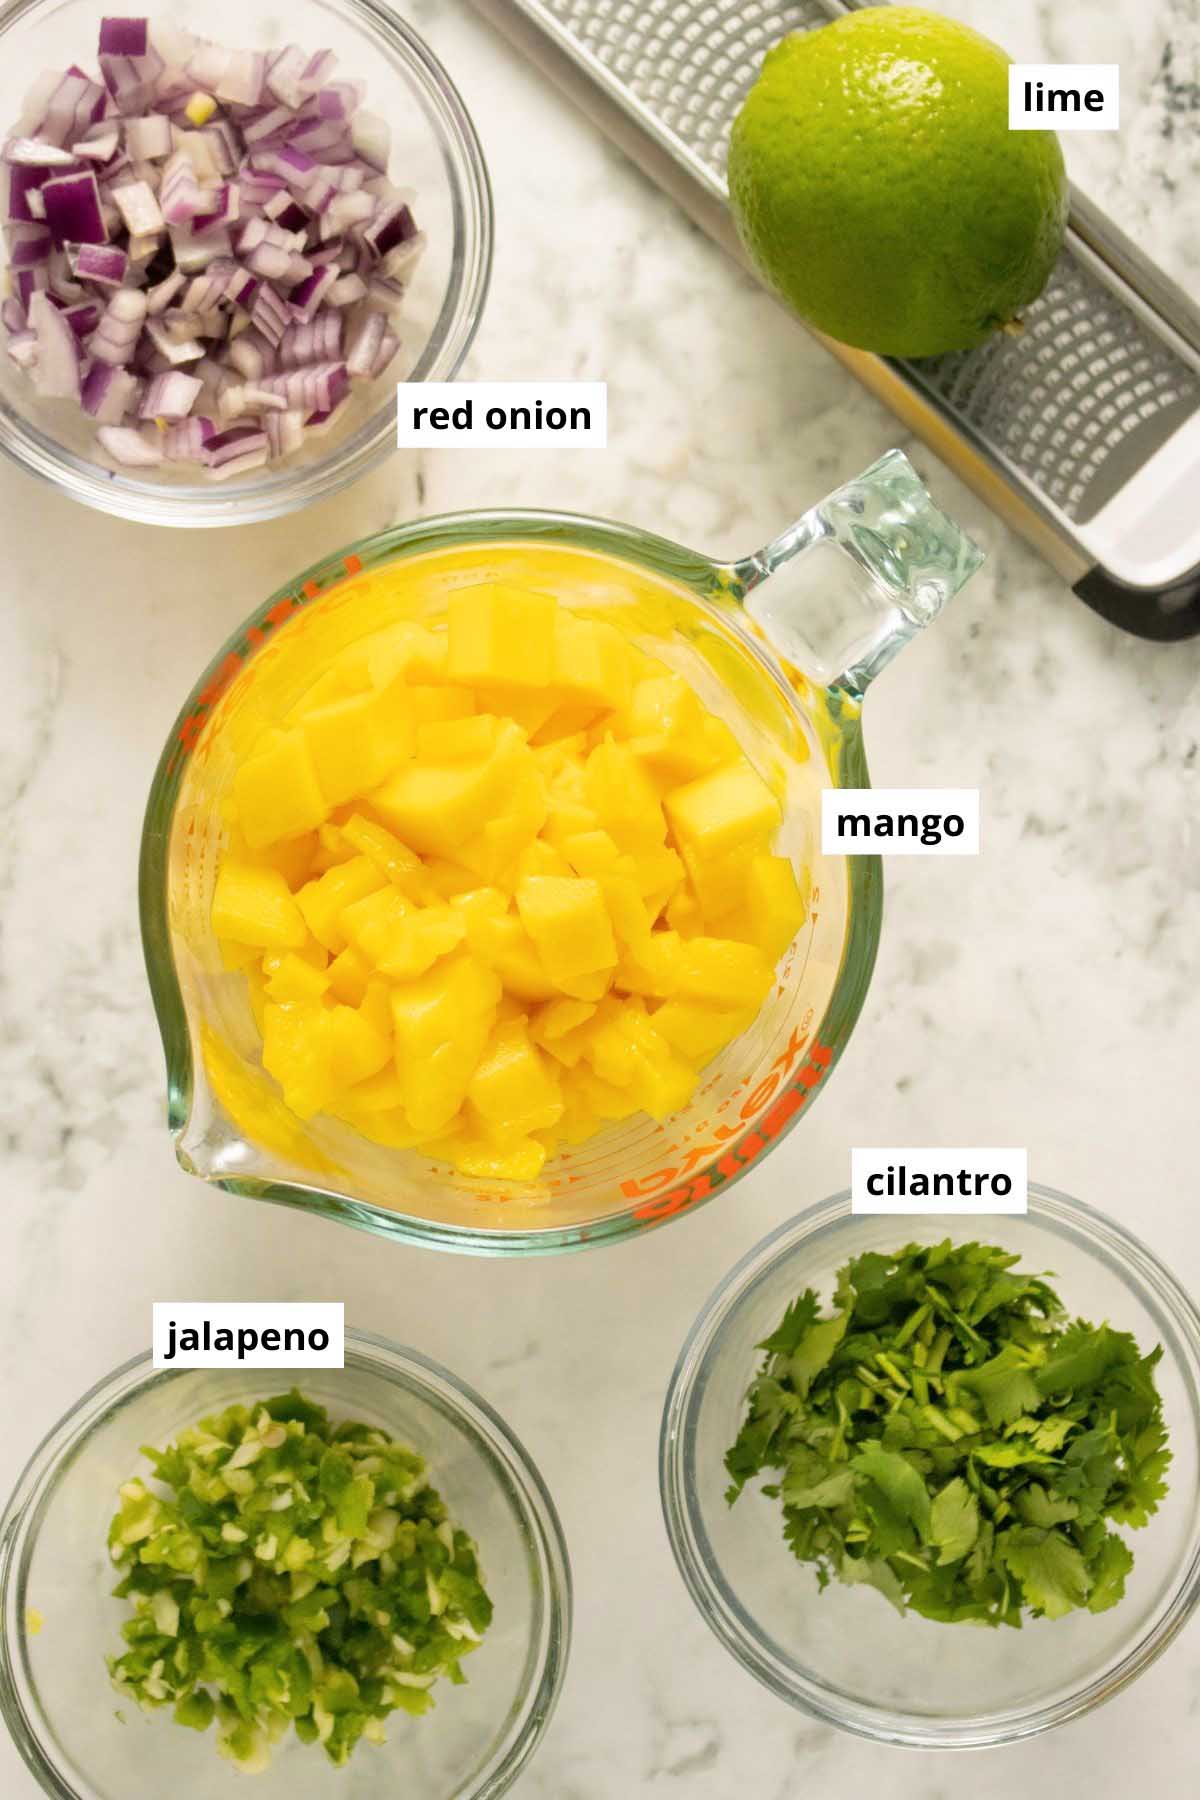 mango, onions, jalapeno, cilantro, and a lime on a white table